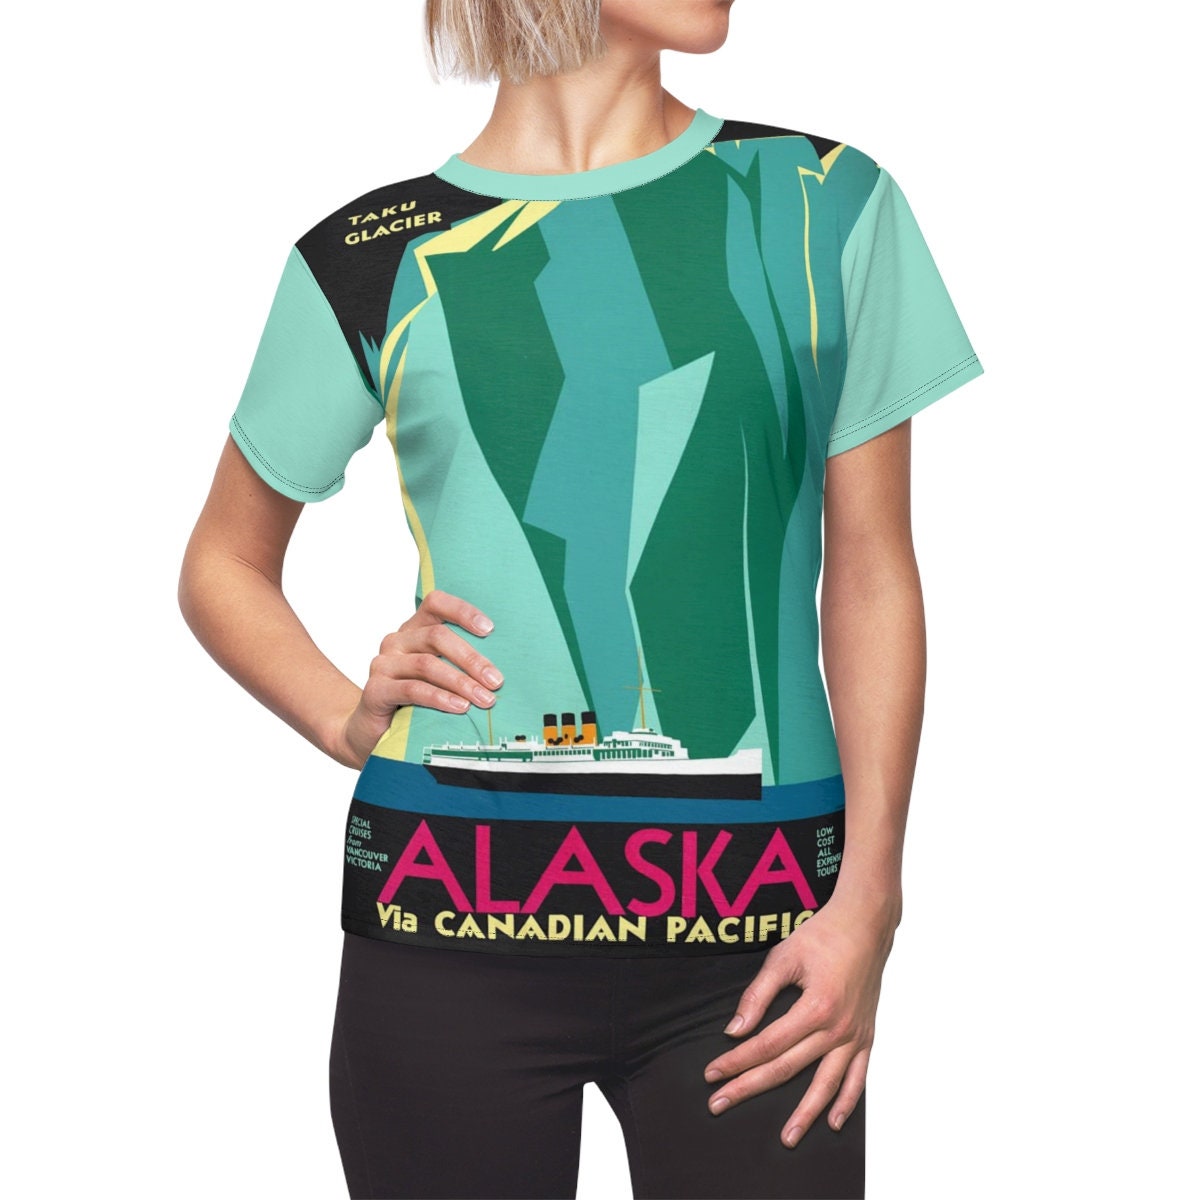 Alaska /Mother's Day / Gift for Her / Women's / Tee T-Shirt Shirt / Wow / Pretty / Valentine's gift / Travel / Vintage / Art / New / Sexy - Chloe Lambertin